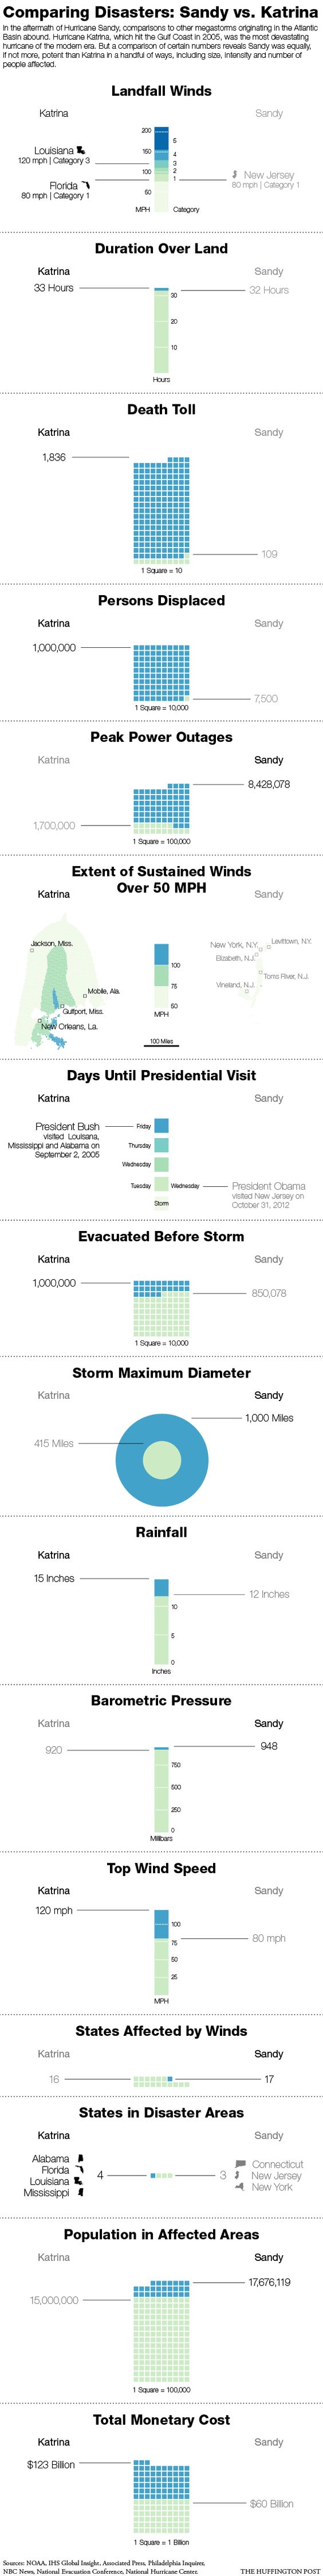 Infographic comparing Hurricanes Sandy vs. Katrina